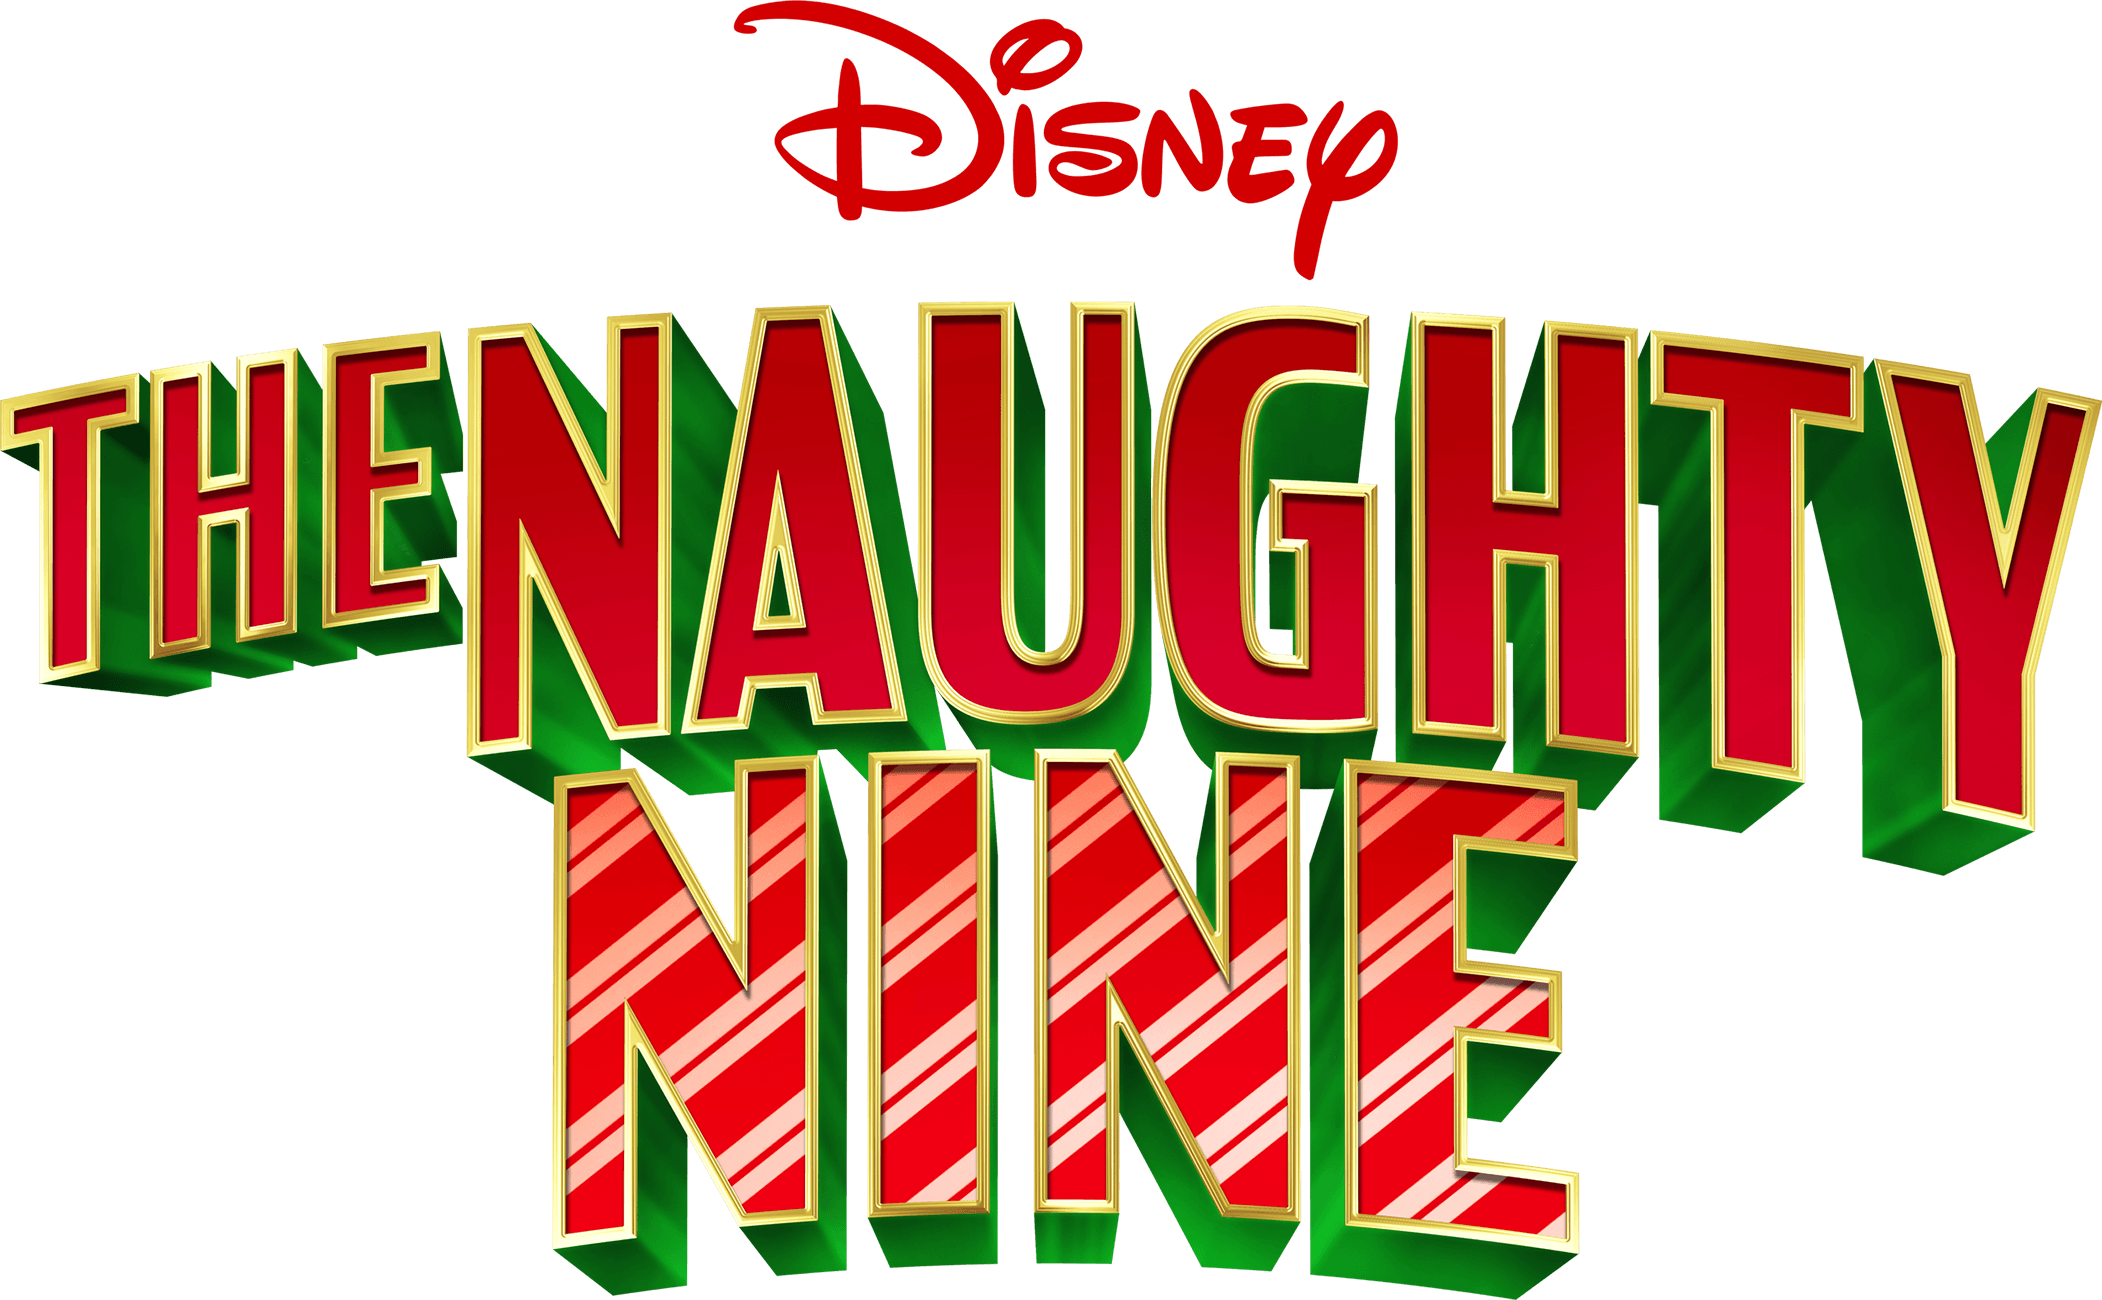 The Naughty Nine logo